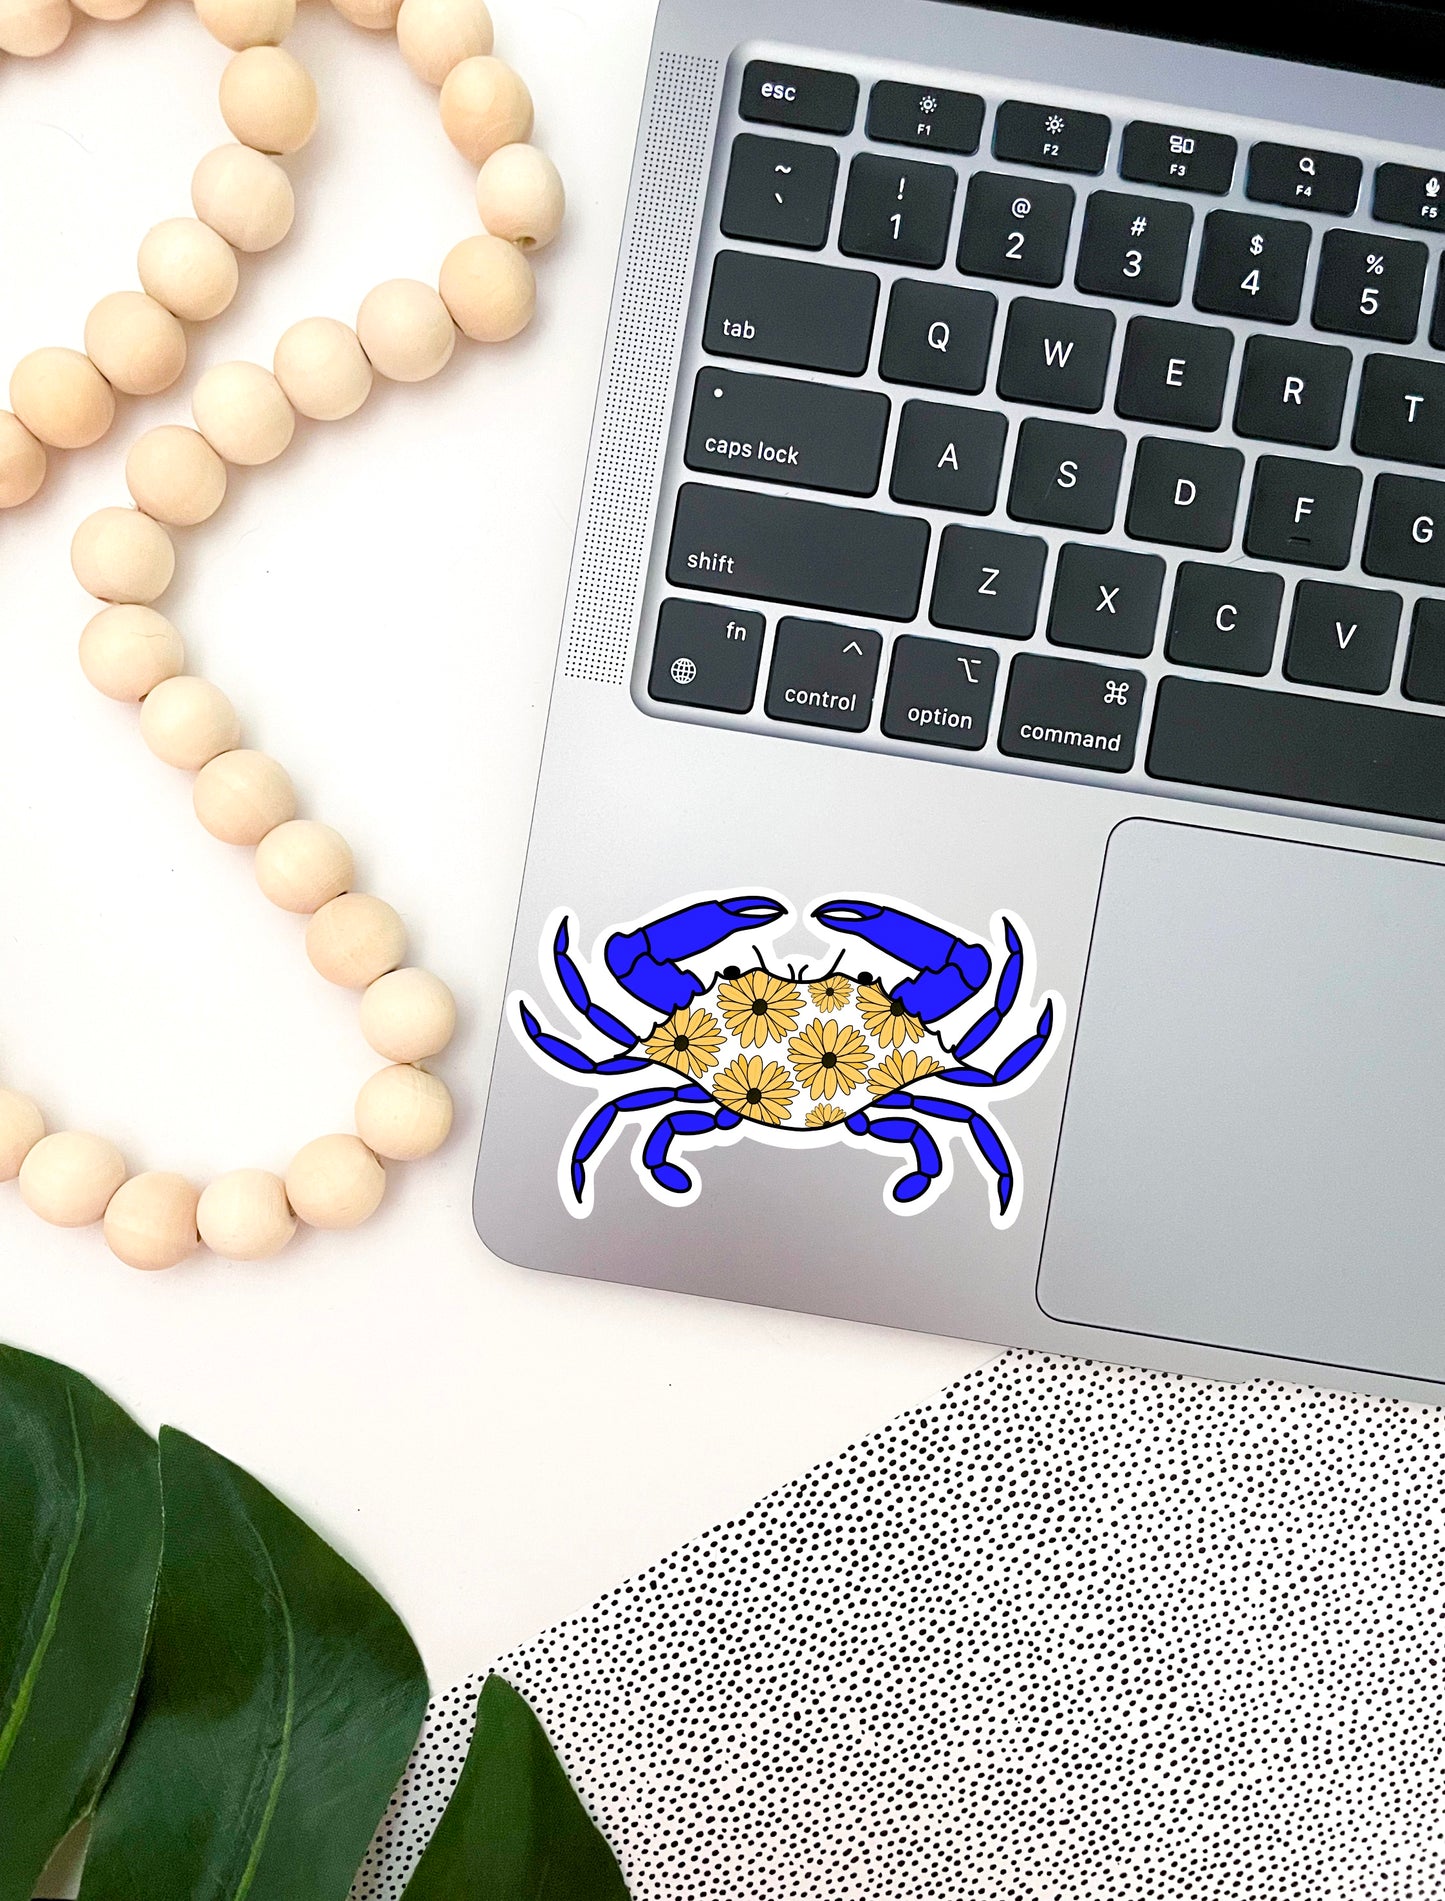 Blue Maryland Crab Black Eyed Susan Flower Sticker